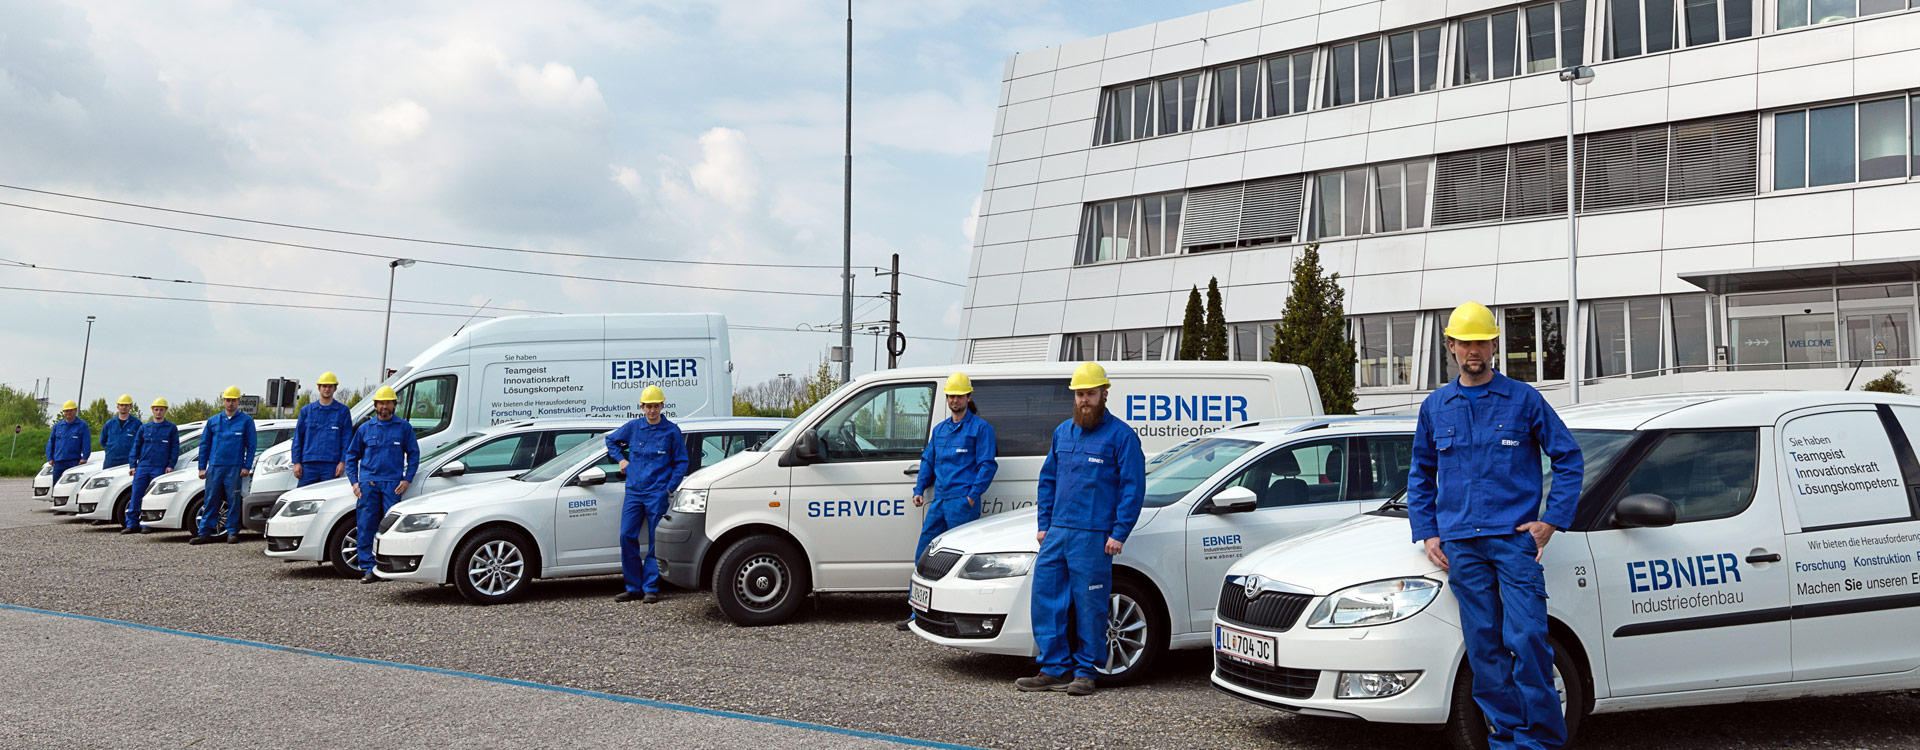 Customer Services - EBNER Group